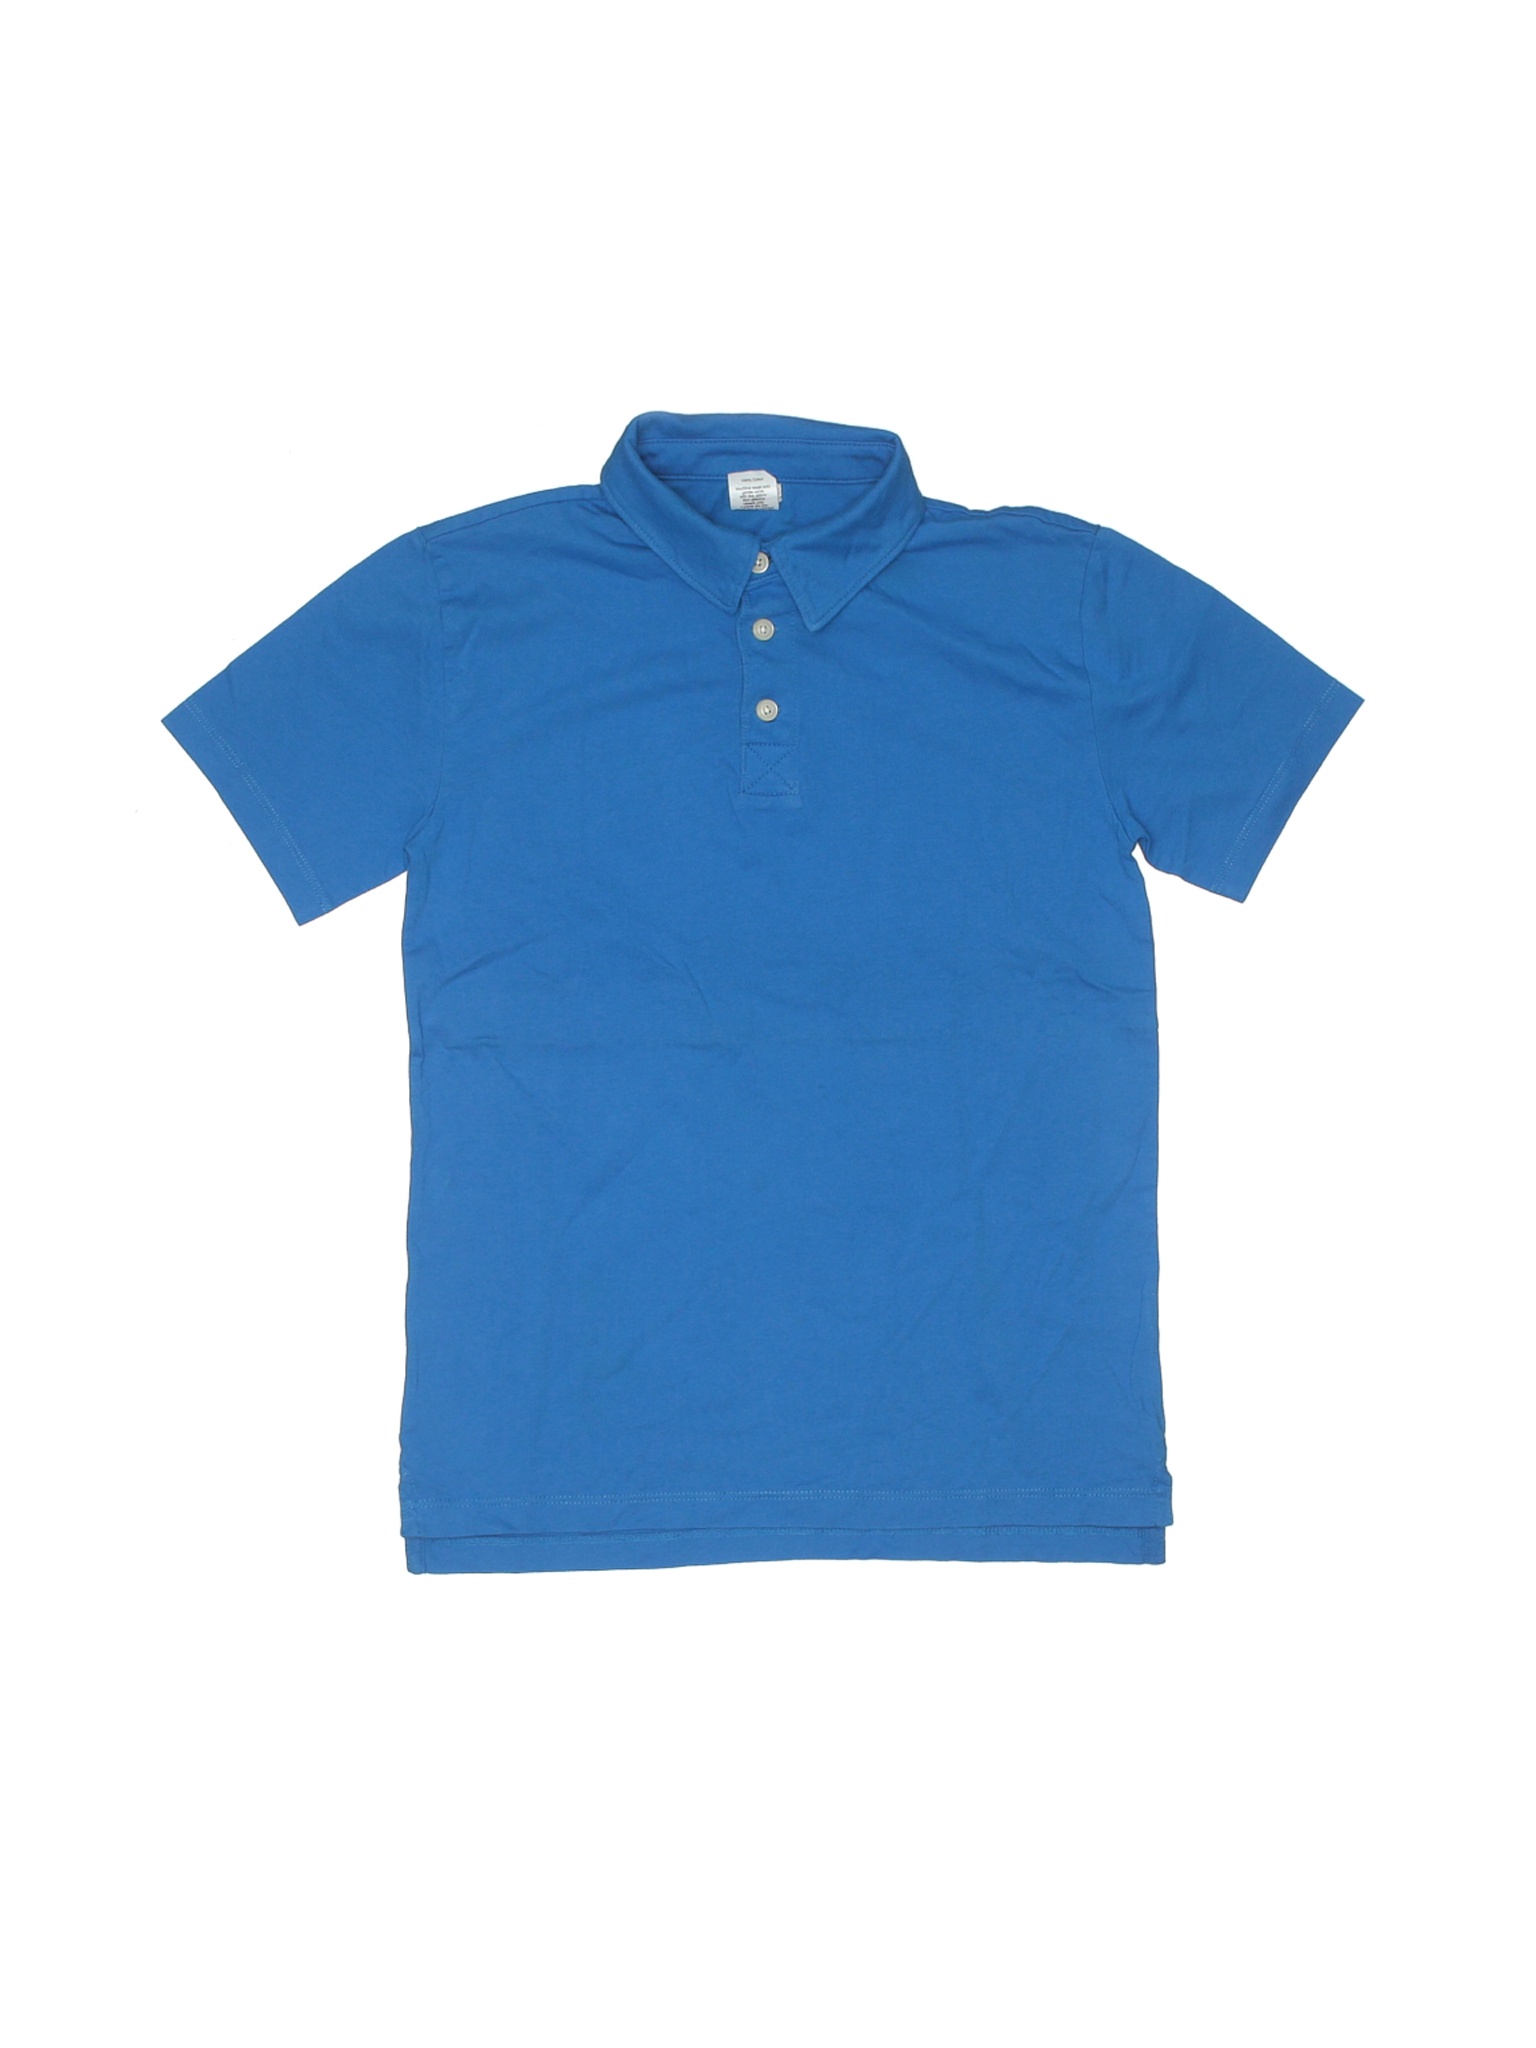 Crewcuts Boys Blue Short Sleeve Polo 12 | eBay